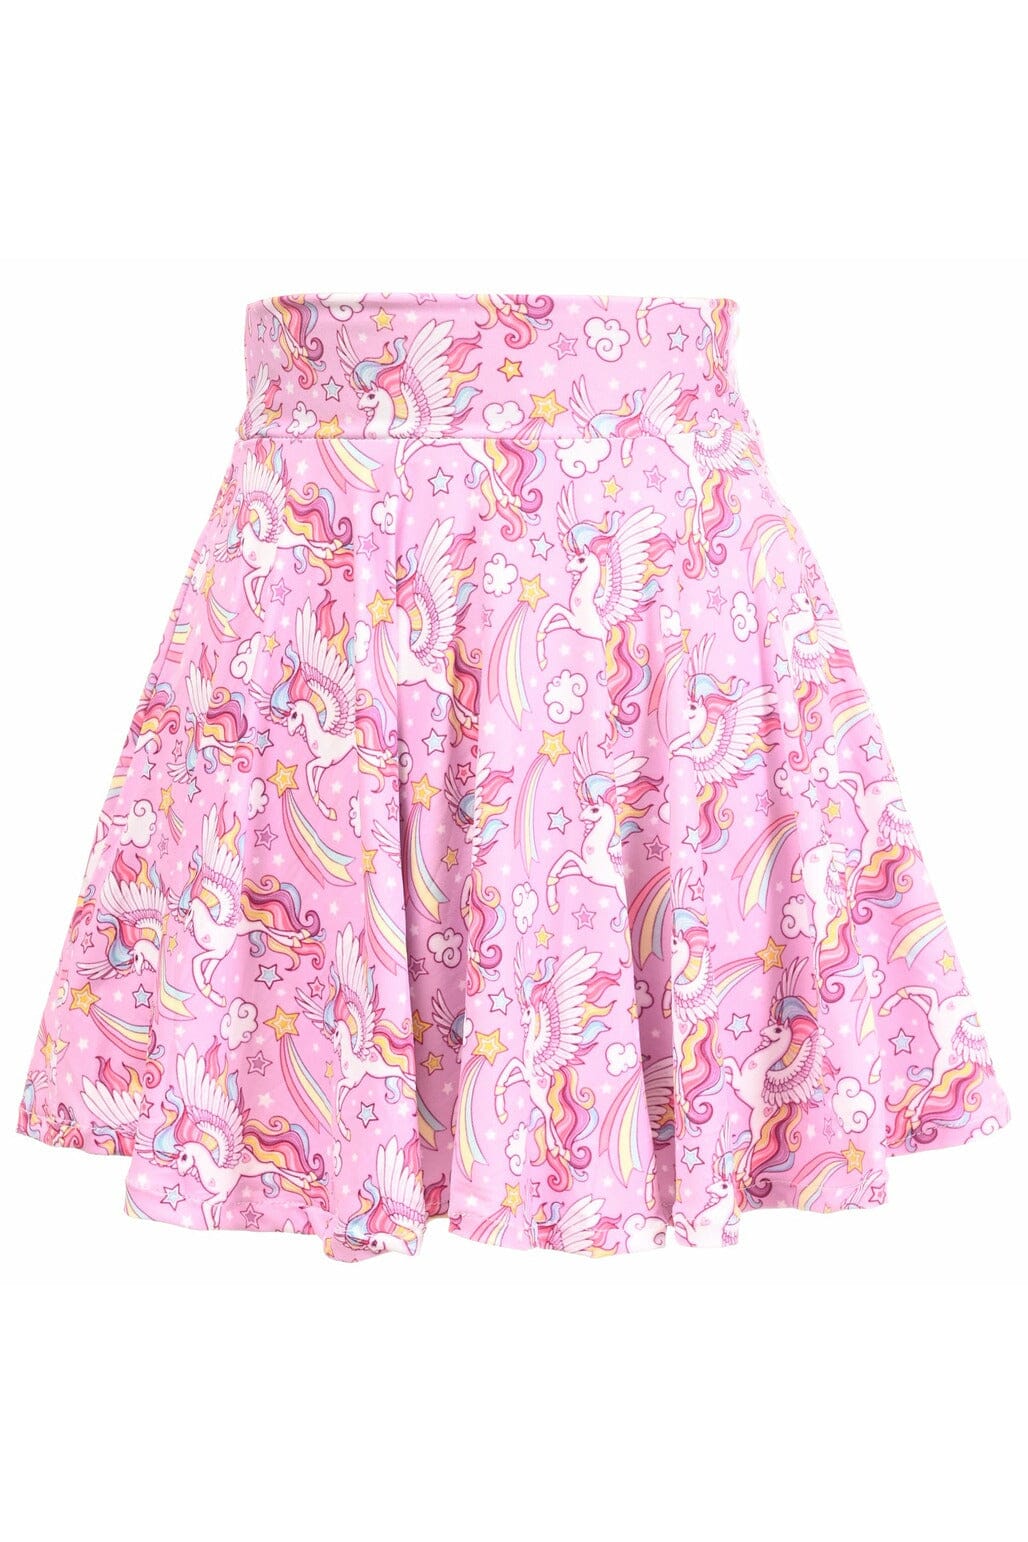 Unicorn Stretch Lycra Skirt-Costume Skirts-Daisy Corsets-Pink-XS-SEXYSHOES.COM